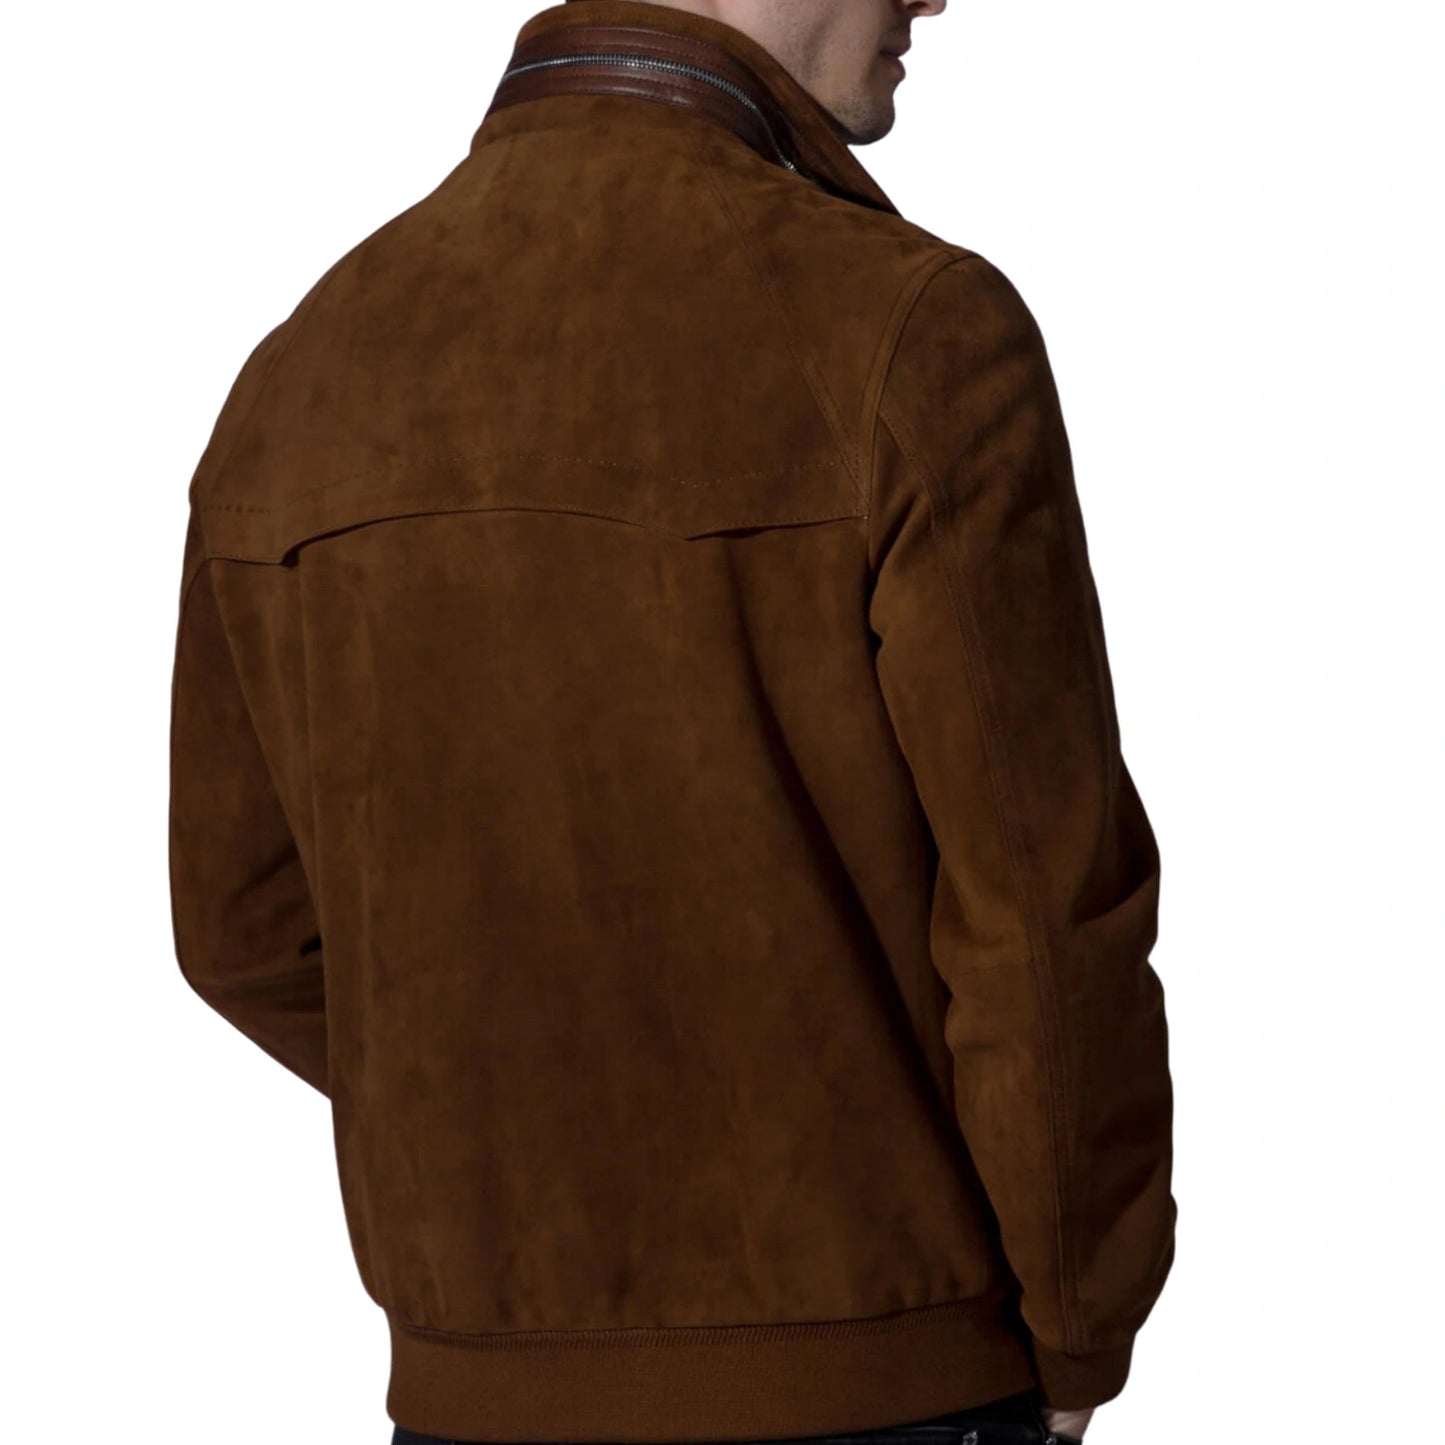 Brown Leather Trucker Bomber Jacket Vintage Suede Jacket